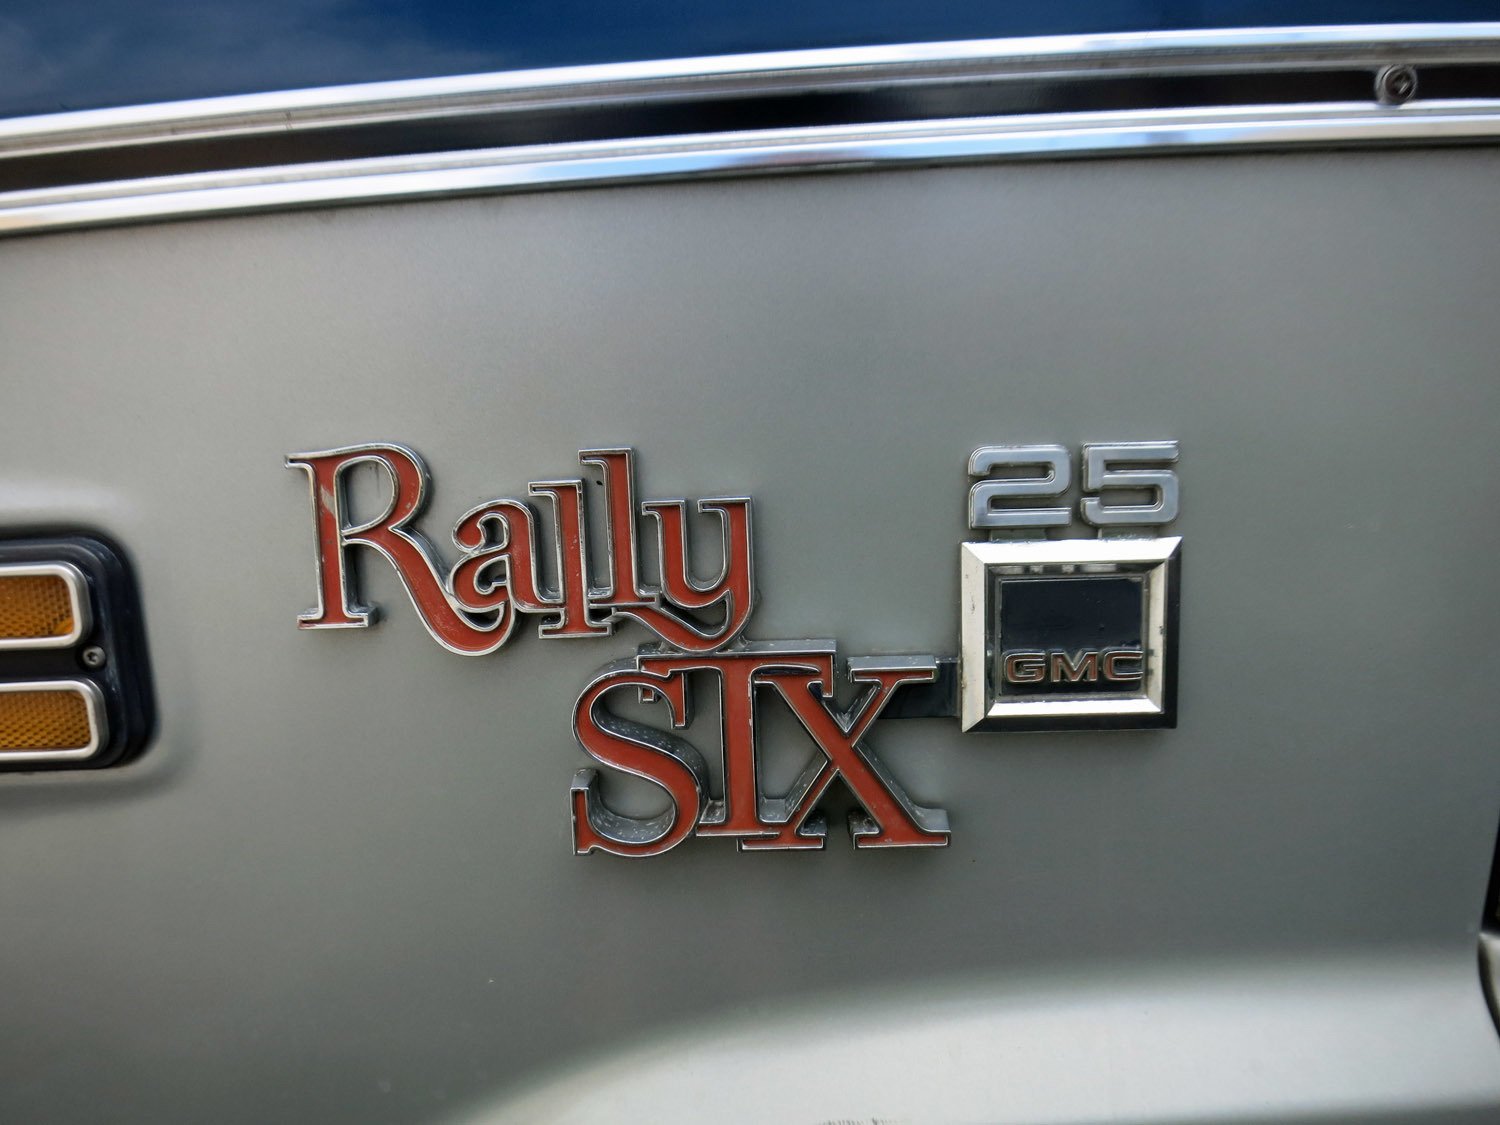 1979 GMC Rally STX 25 Van